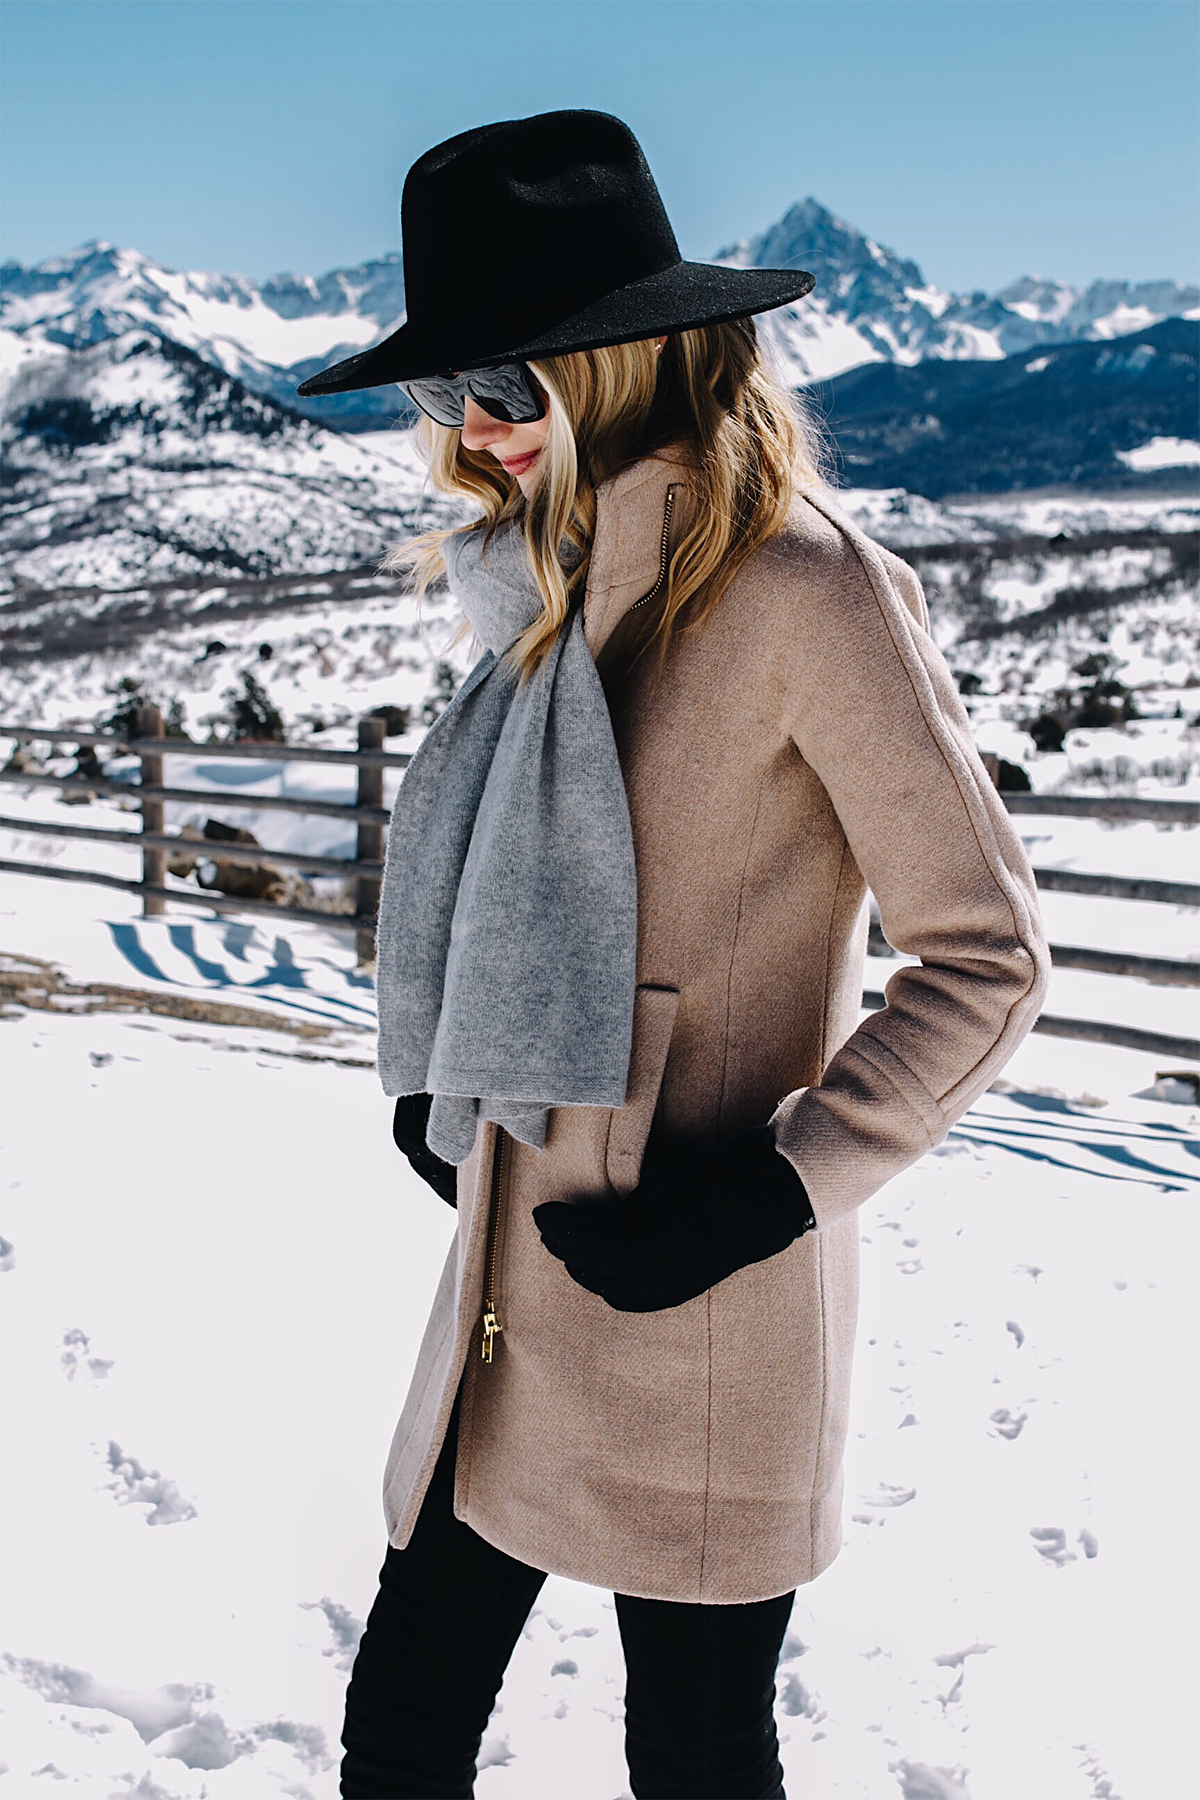 Telluride CO Snow Mountains Blonde Woman Wearing Grey Scarf Camel Coat Black Wool Hat Black Gloves Fashion Jackson Dallas Blogger Fashion Blogger